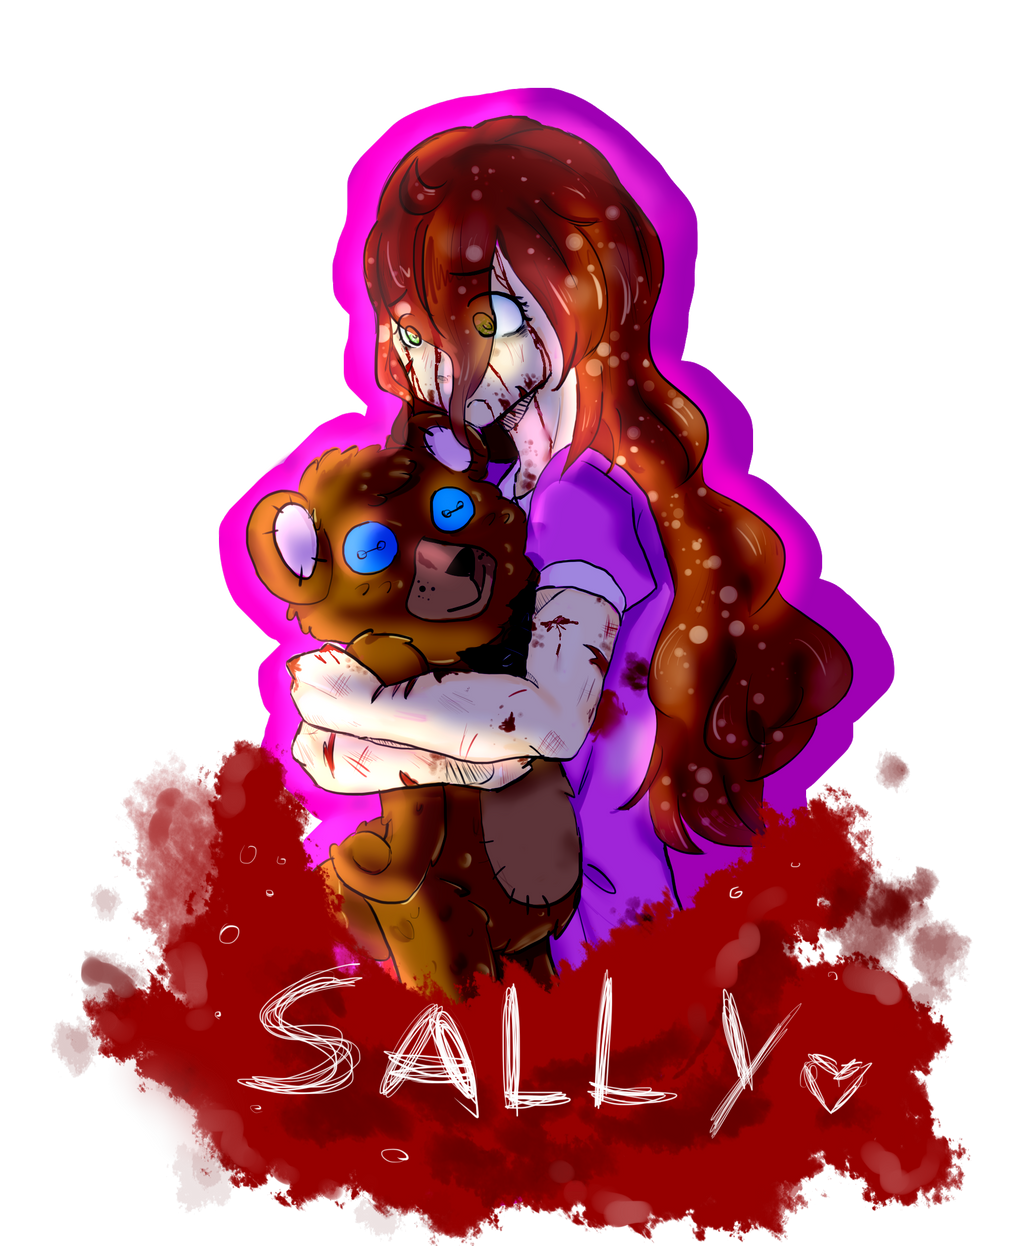 Sally creepypasta - PLAY WITH ME 